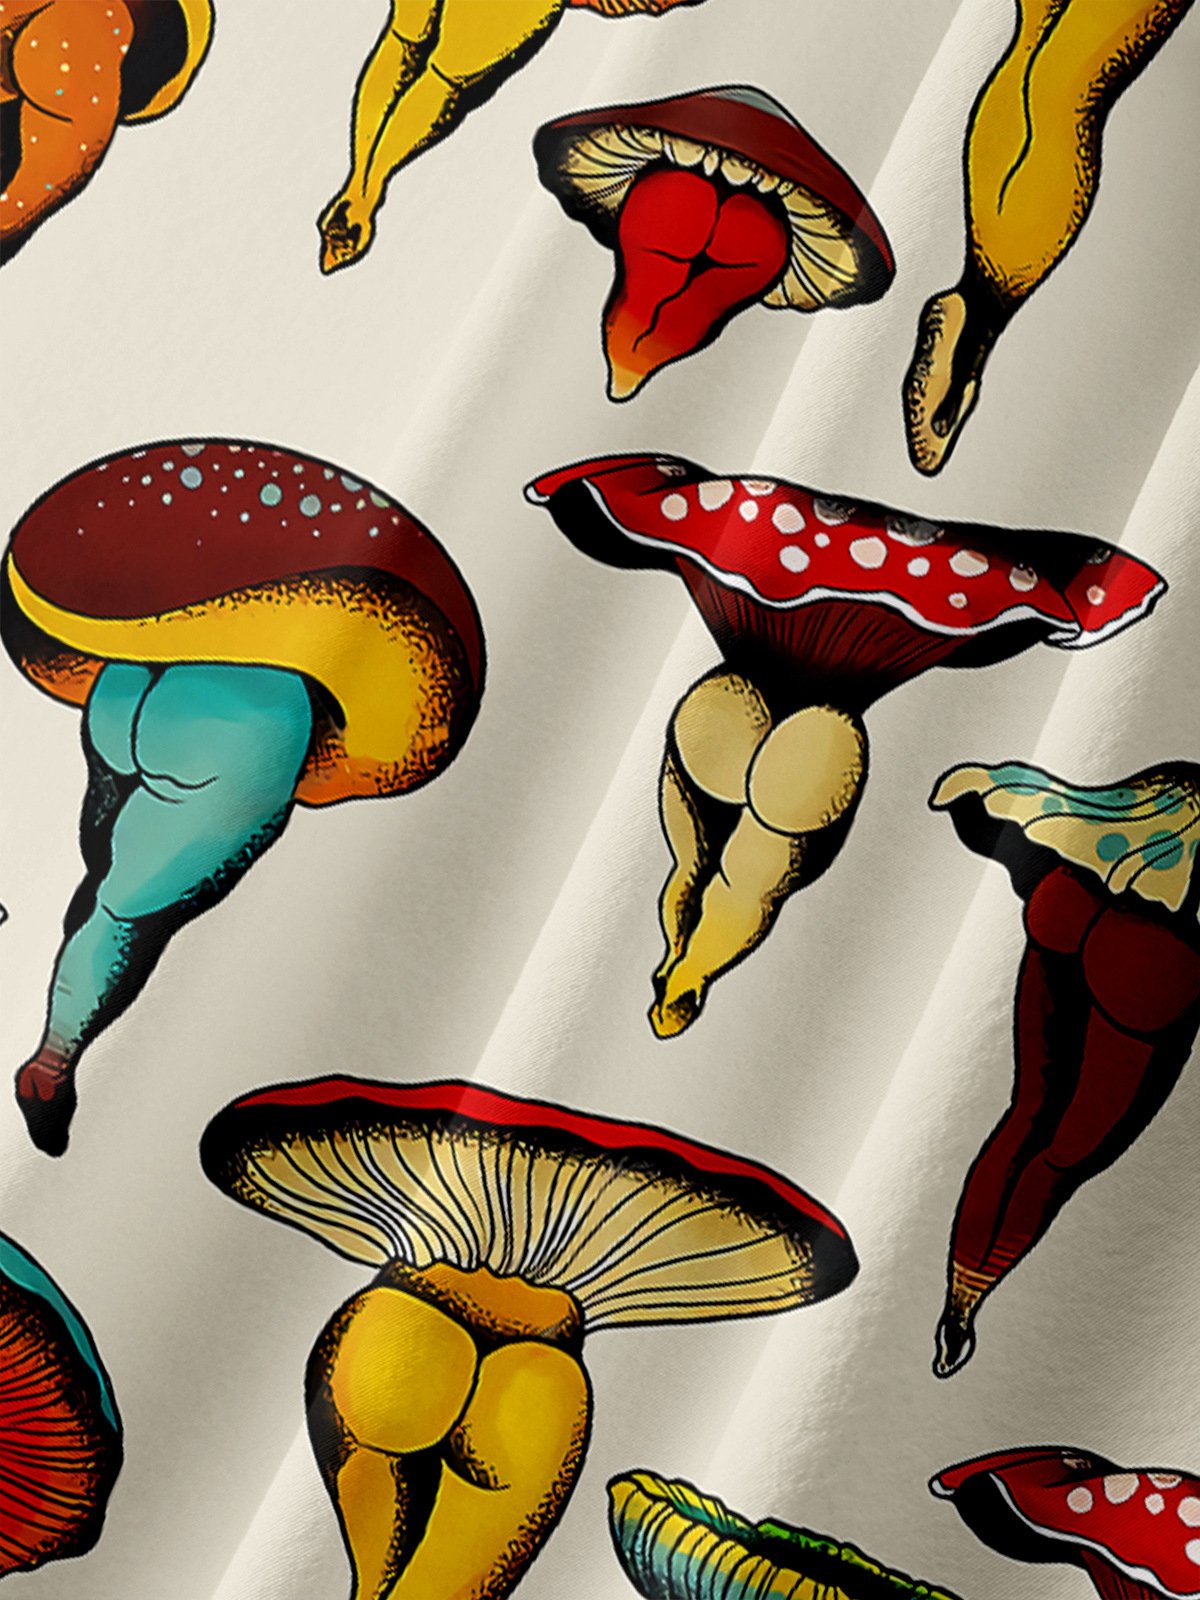 Fun Mushroom Chest Pocket Short Sleeve Casual Shirt